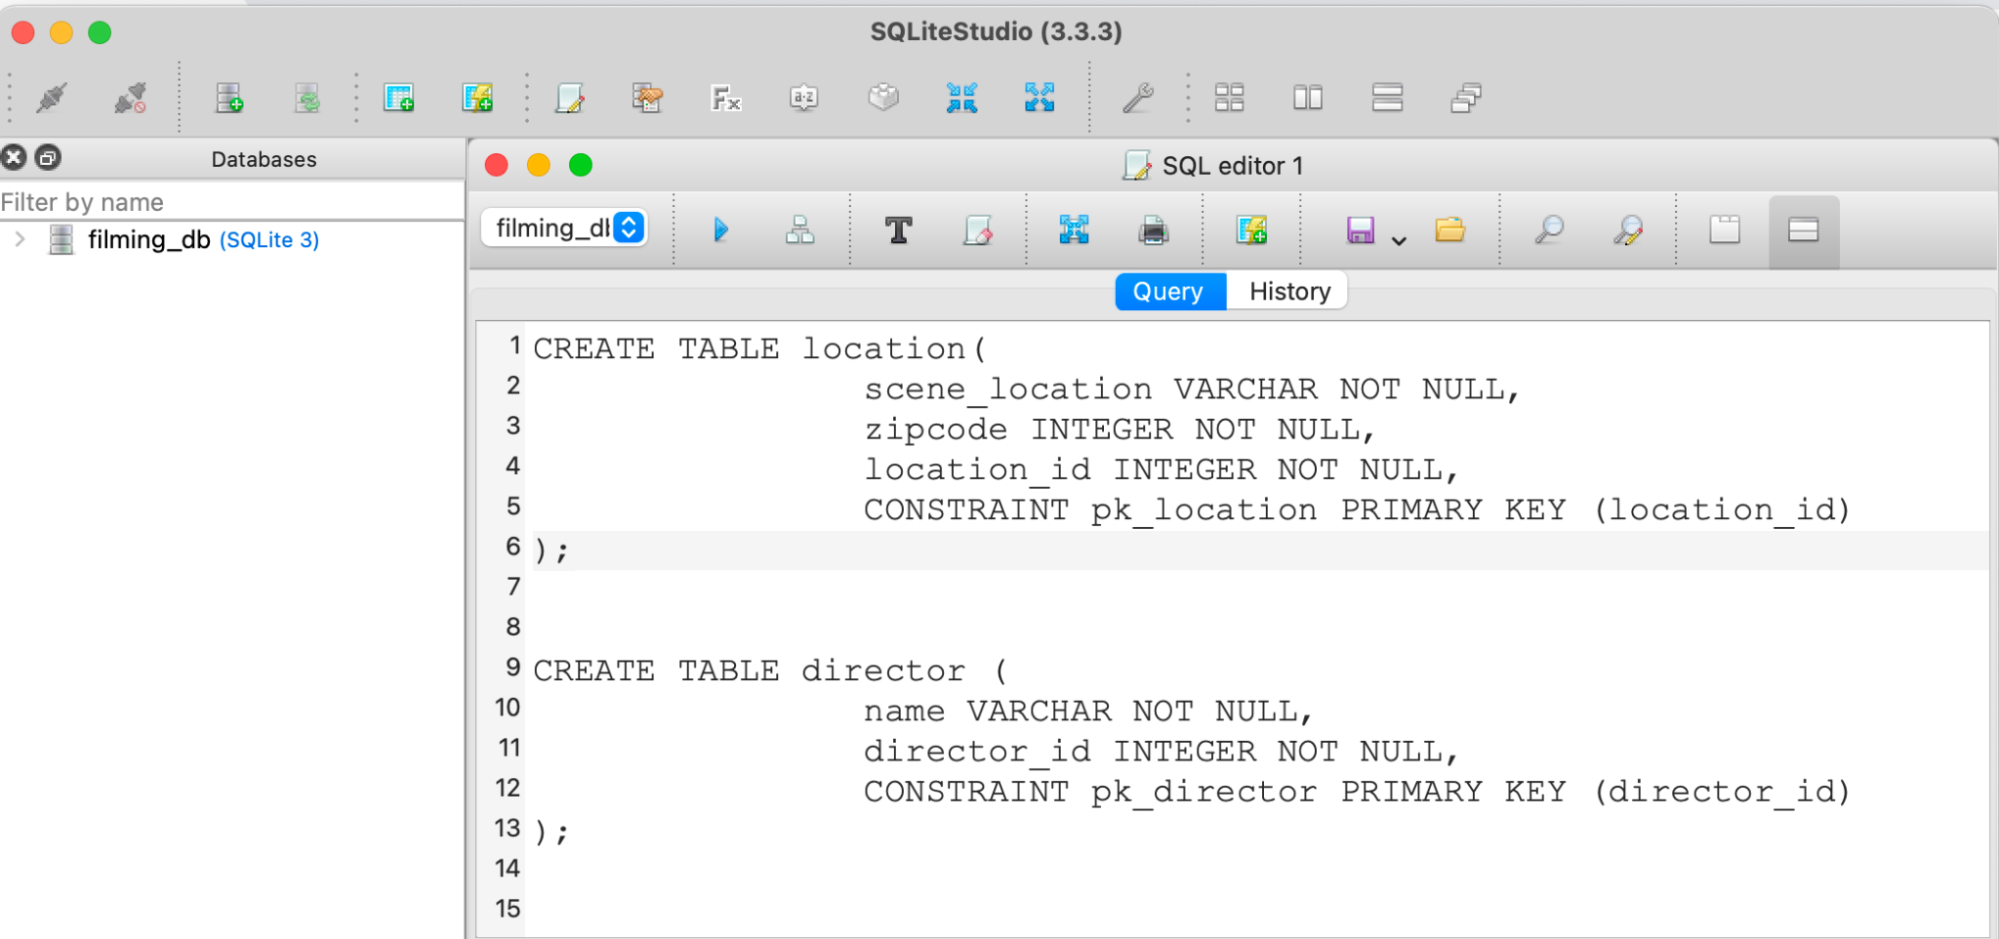 Run the SQL code